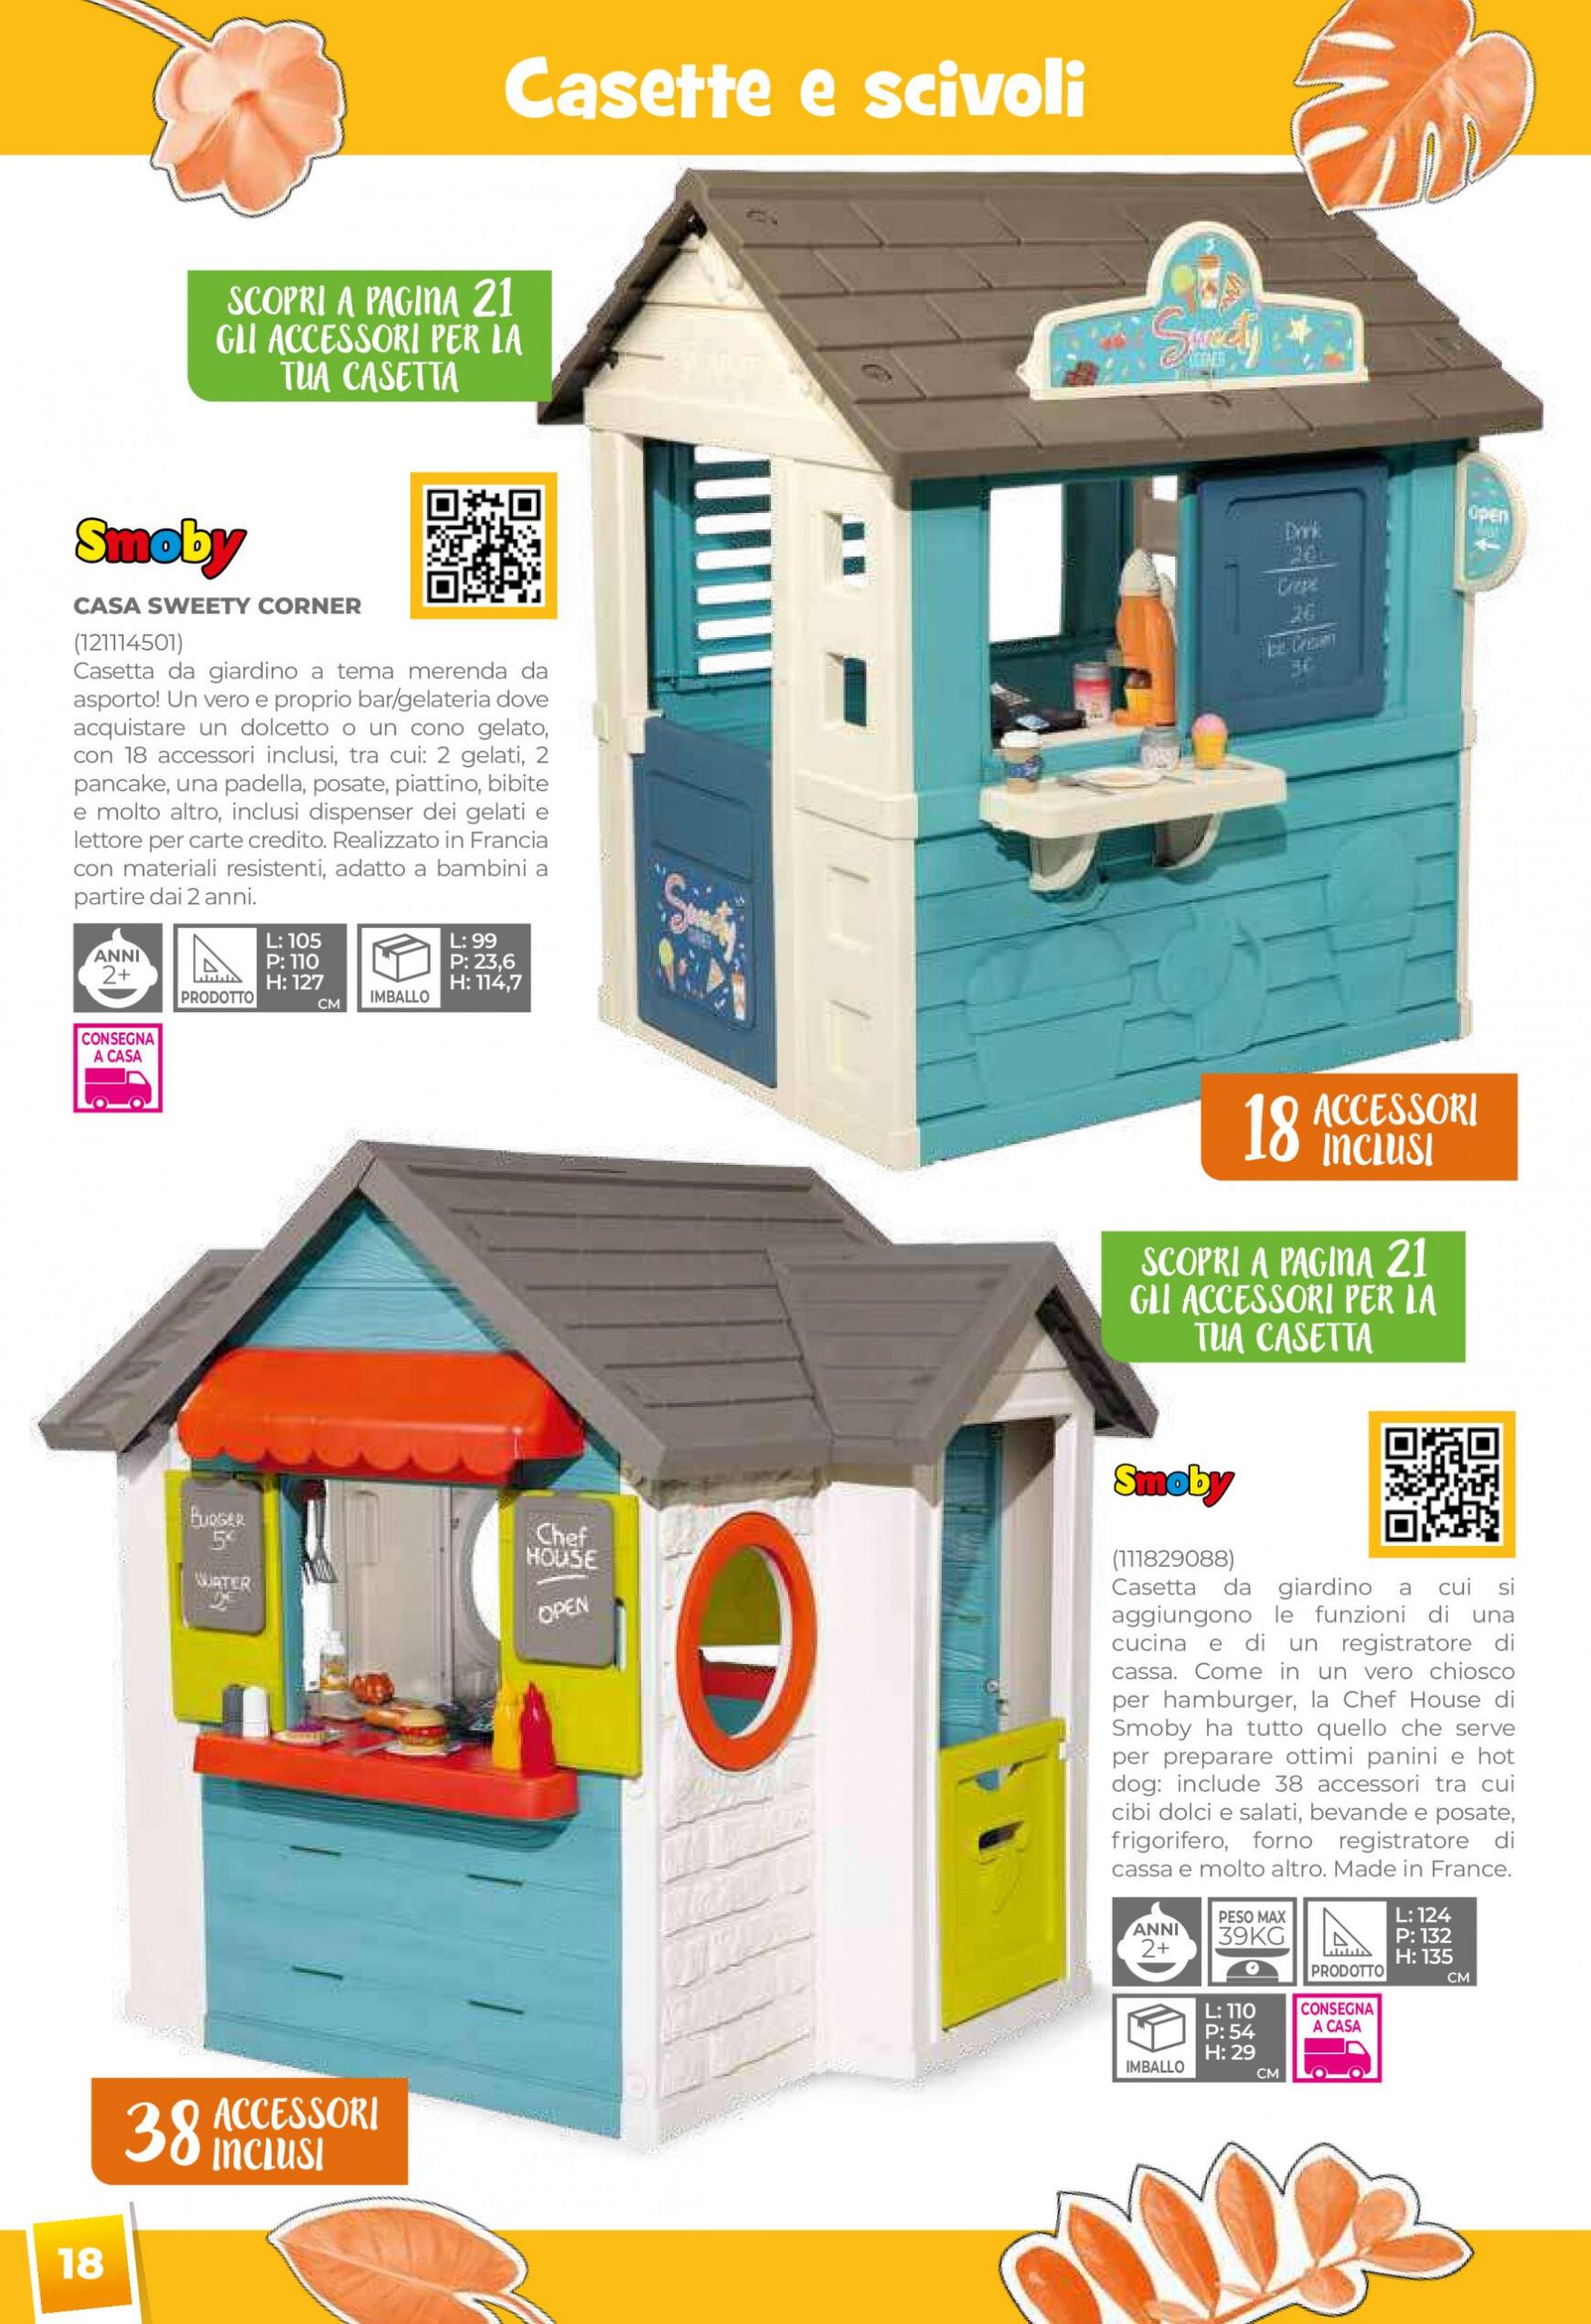 toys-center - Nuovo volantino Toys Center 01.05. - 31.12. - page: 20